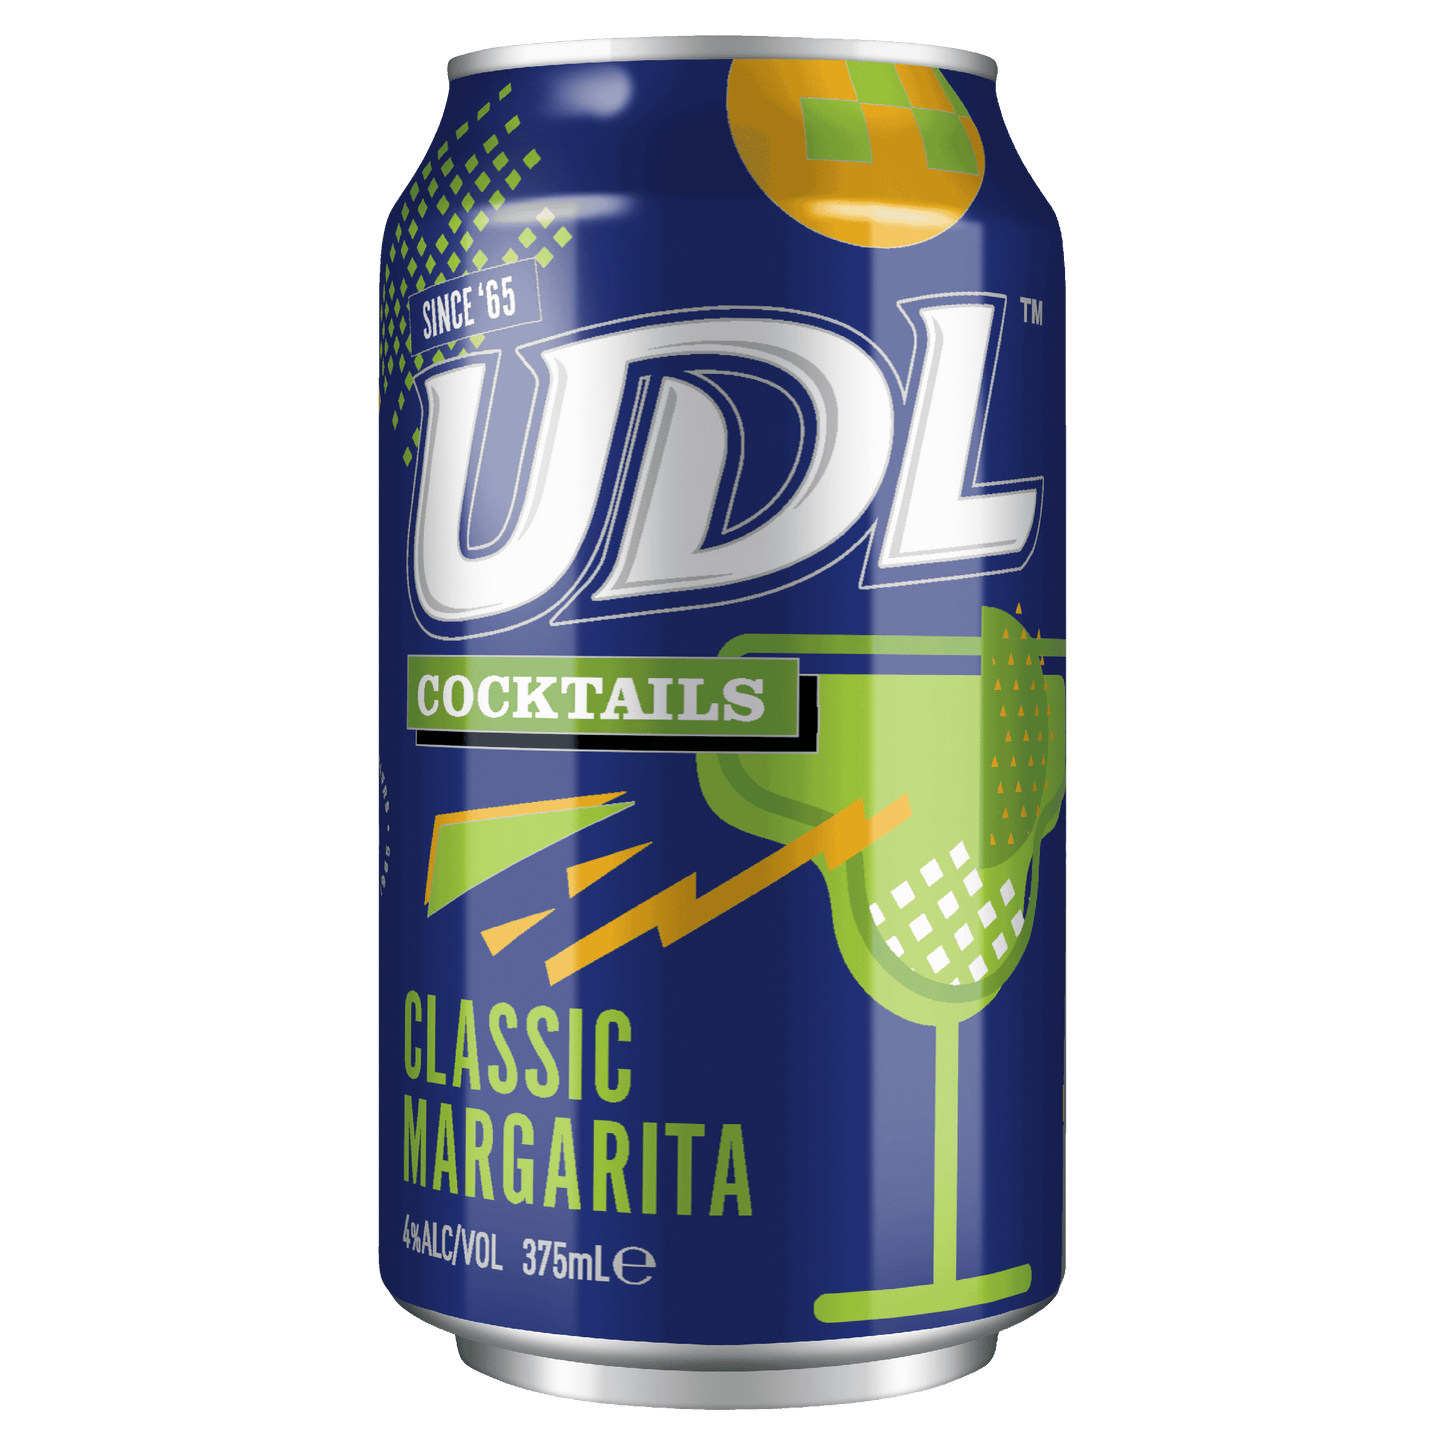 UDL Vodka Margarita